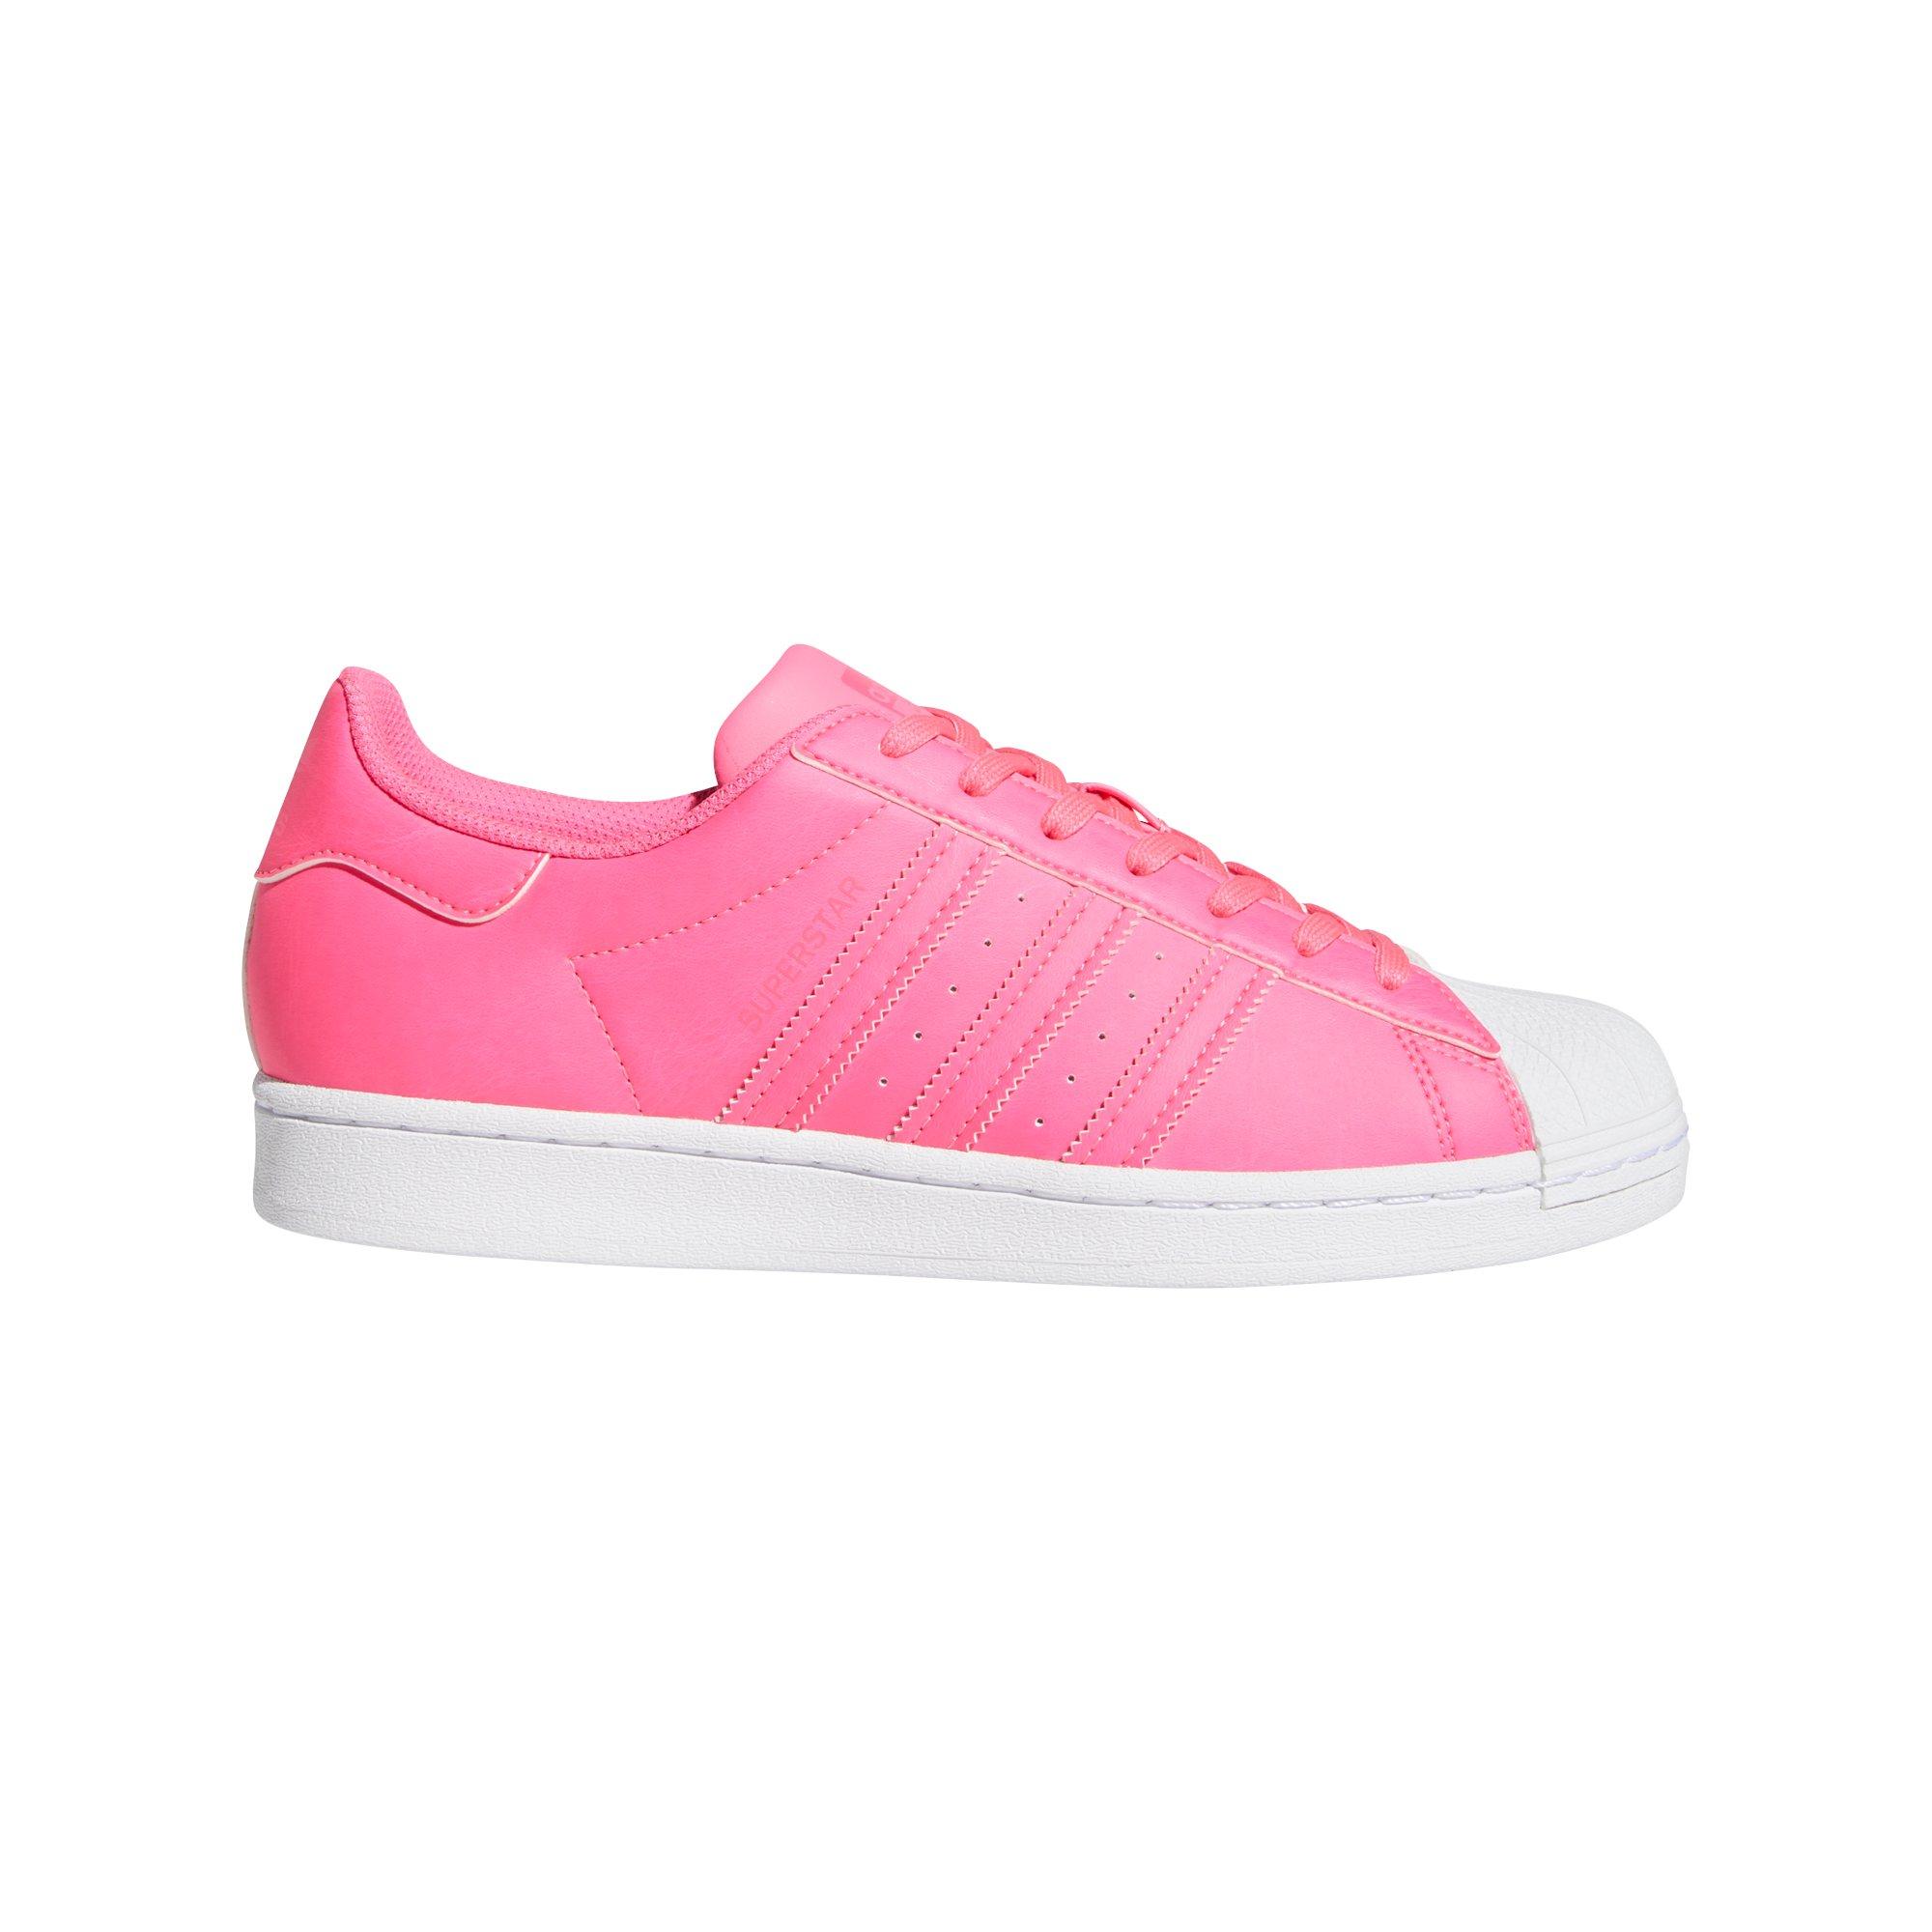 pink and white adidas superstars